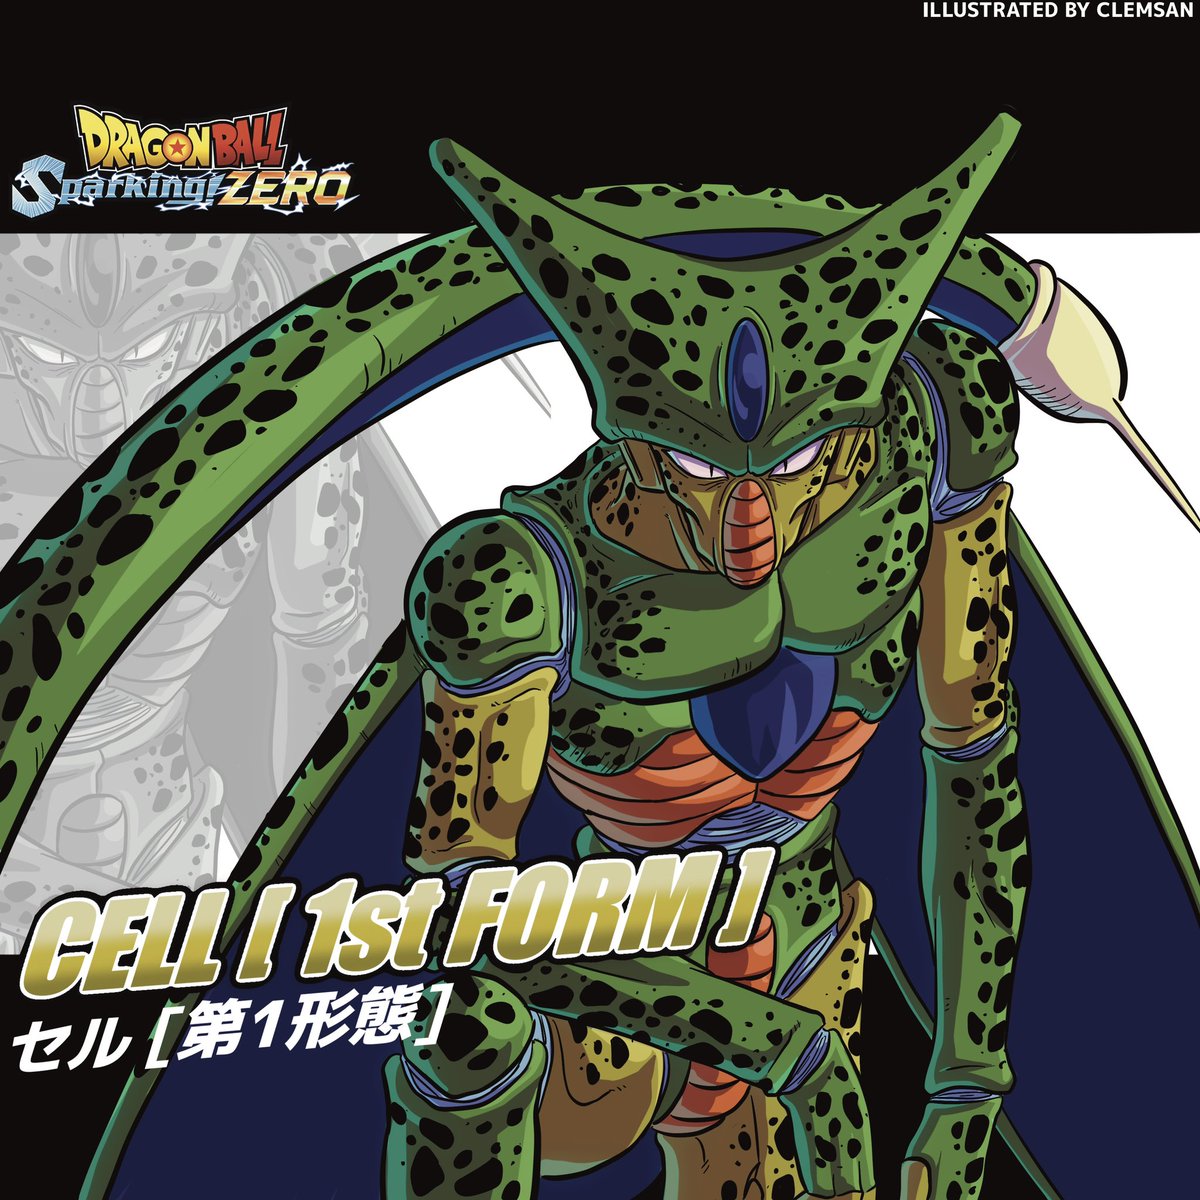 New artwork - Cell first form joins the Dragon Ball Sparking Zero roster #DragonBallFanart #dragonballsparkingzero